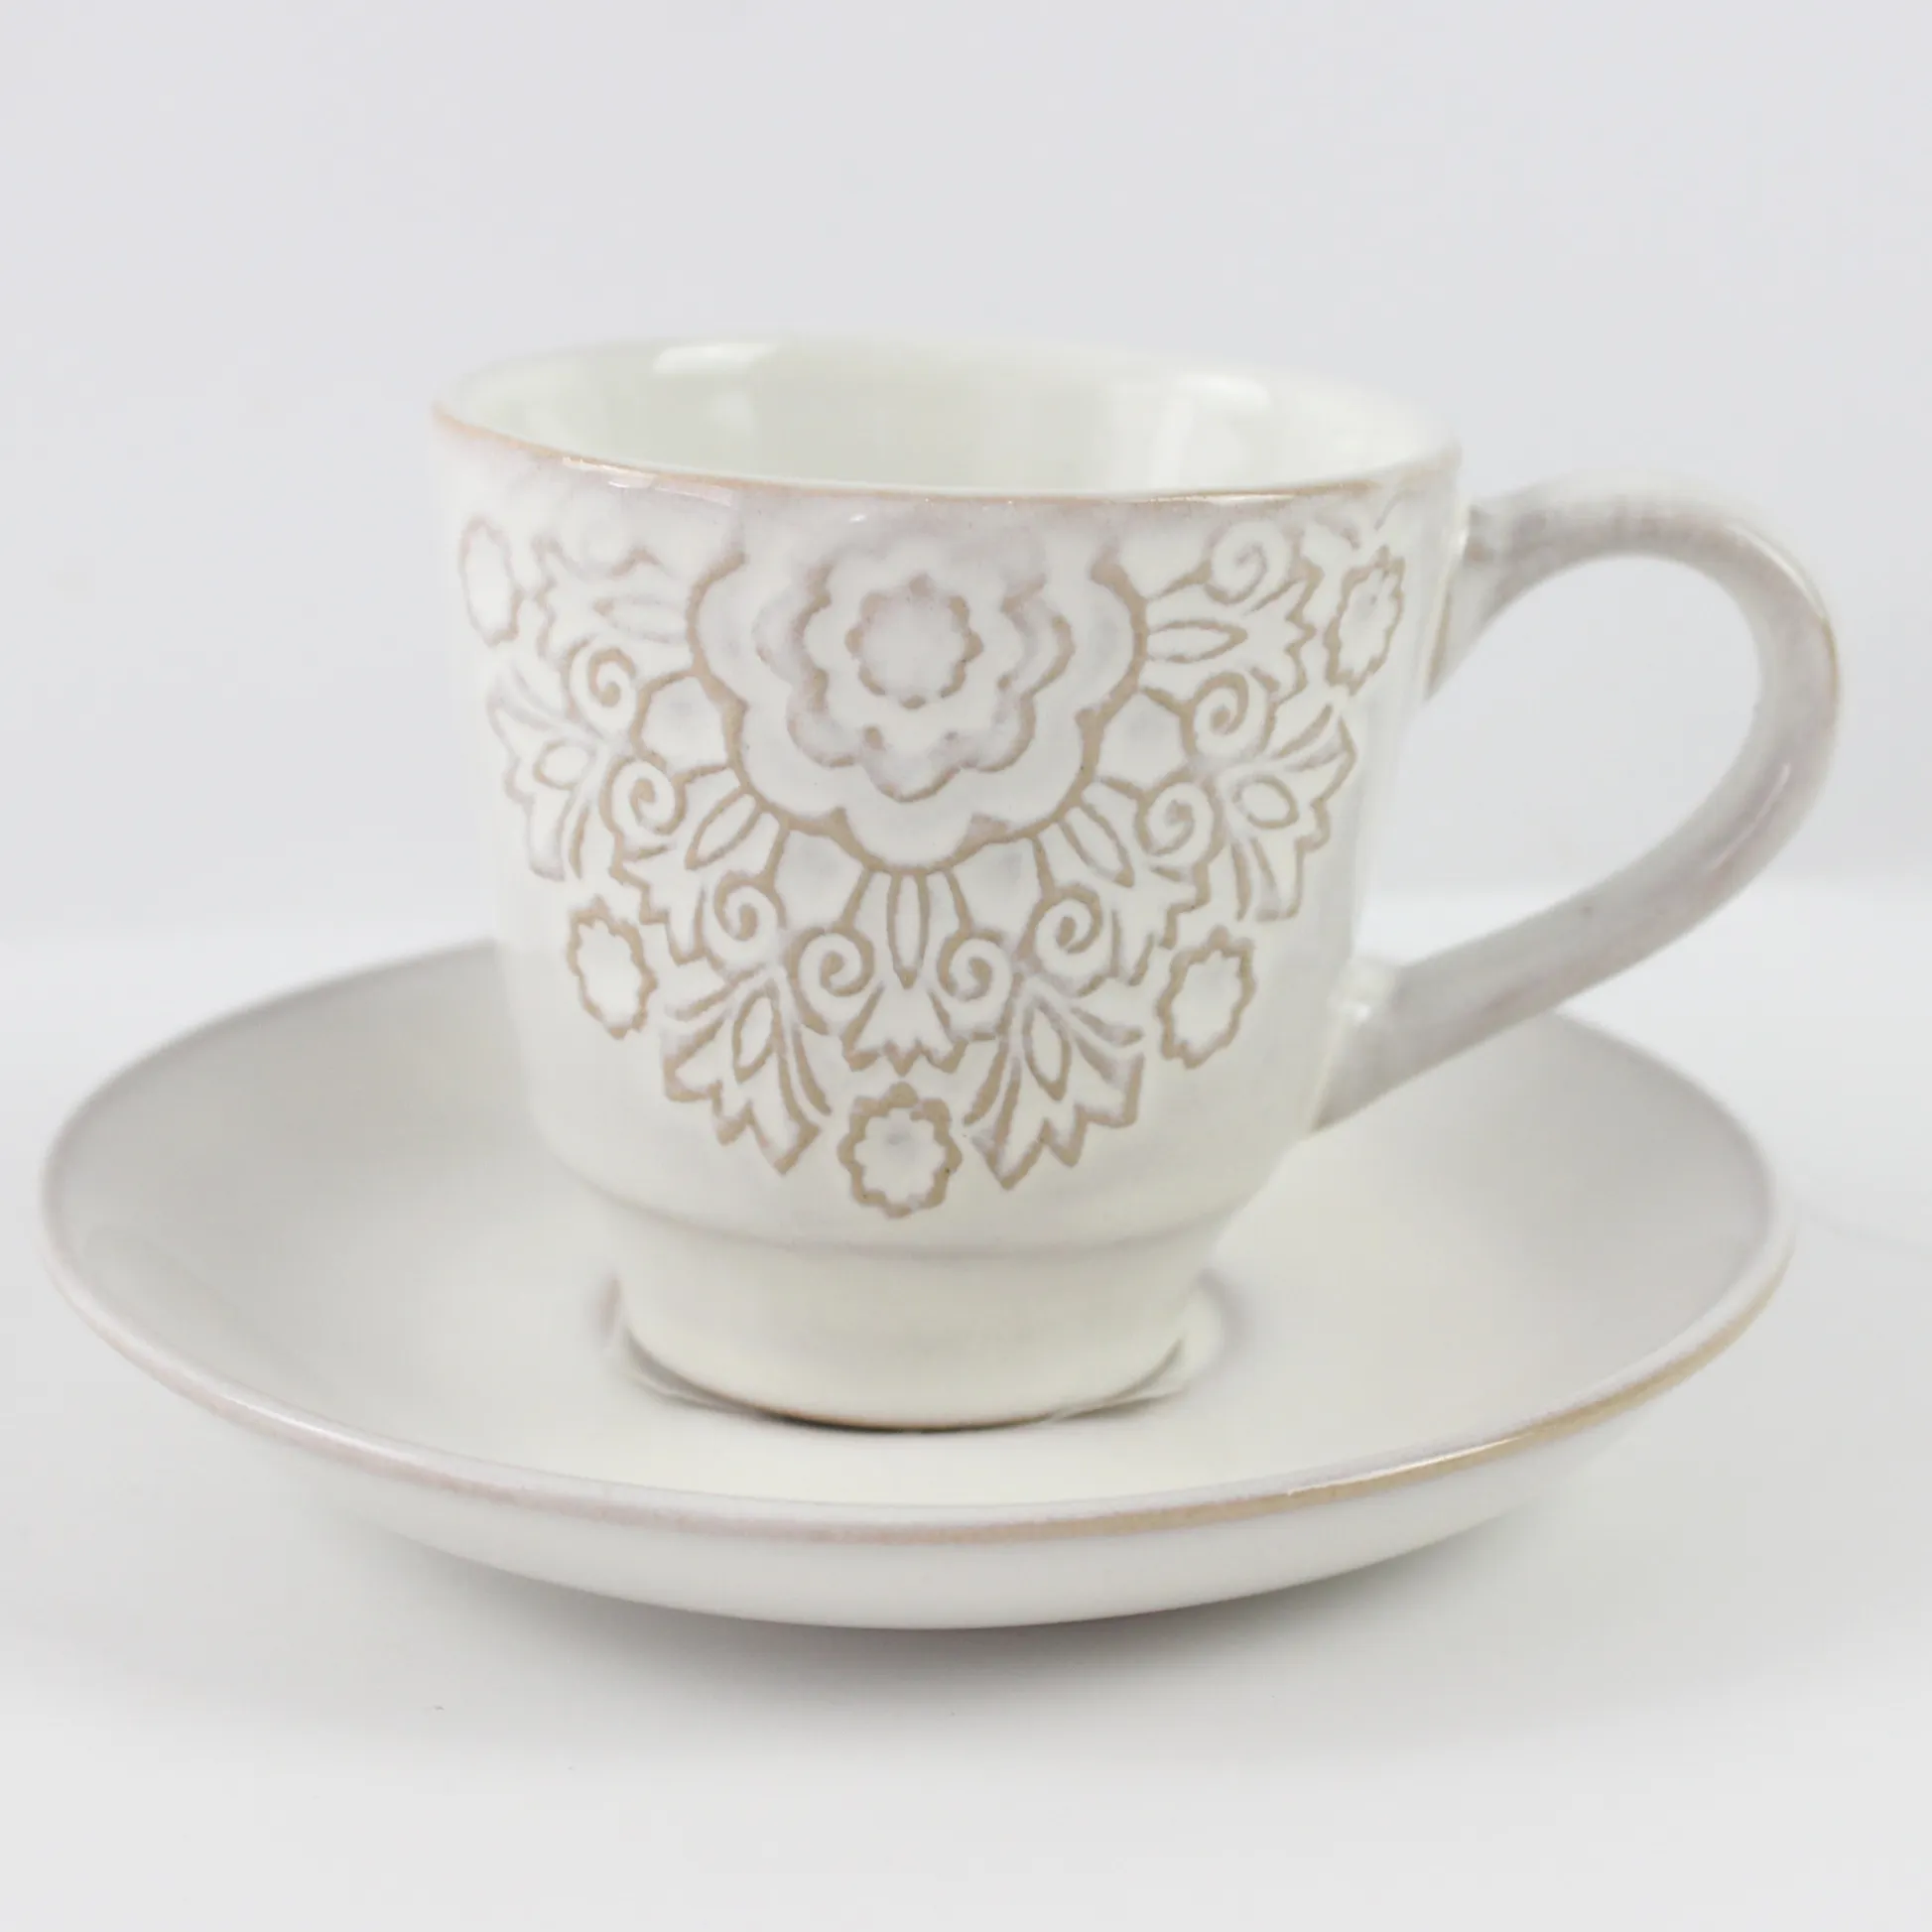 110ML 3.5OZ Teacup and Saucer sets,Cup and Saucer set Porcelain,Ceramic Cup and Saucer set-Factory Wholesale